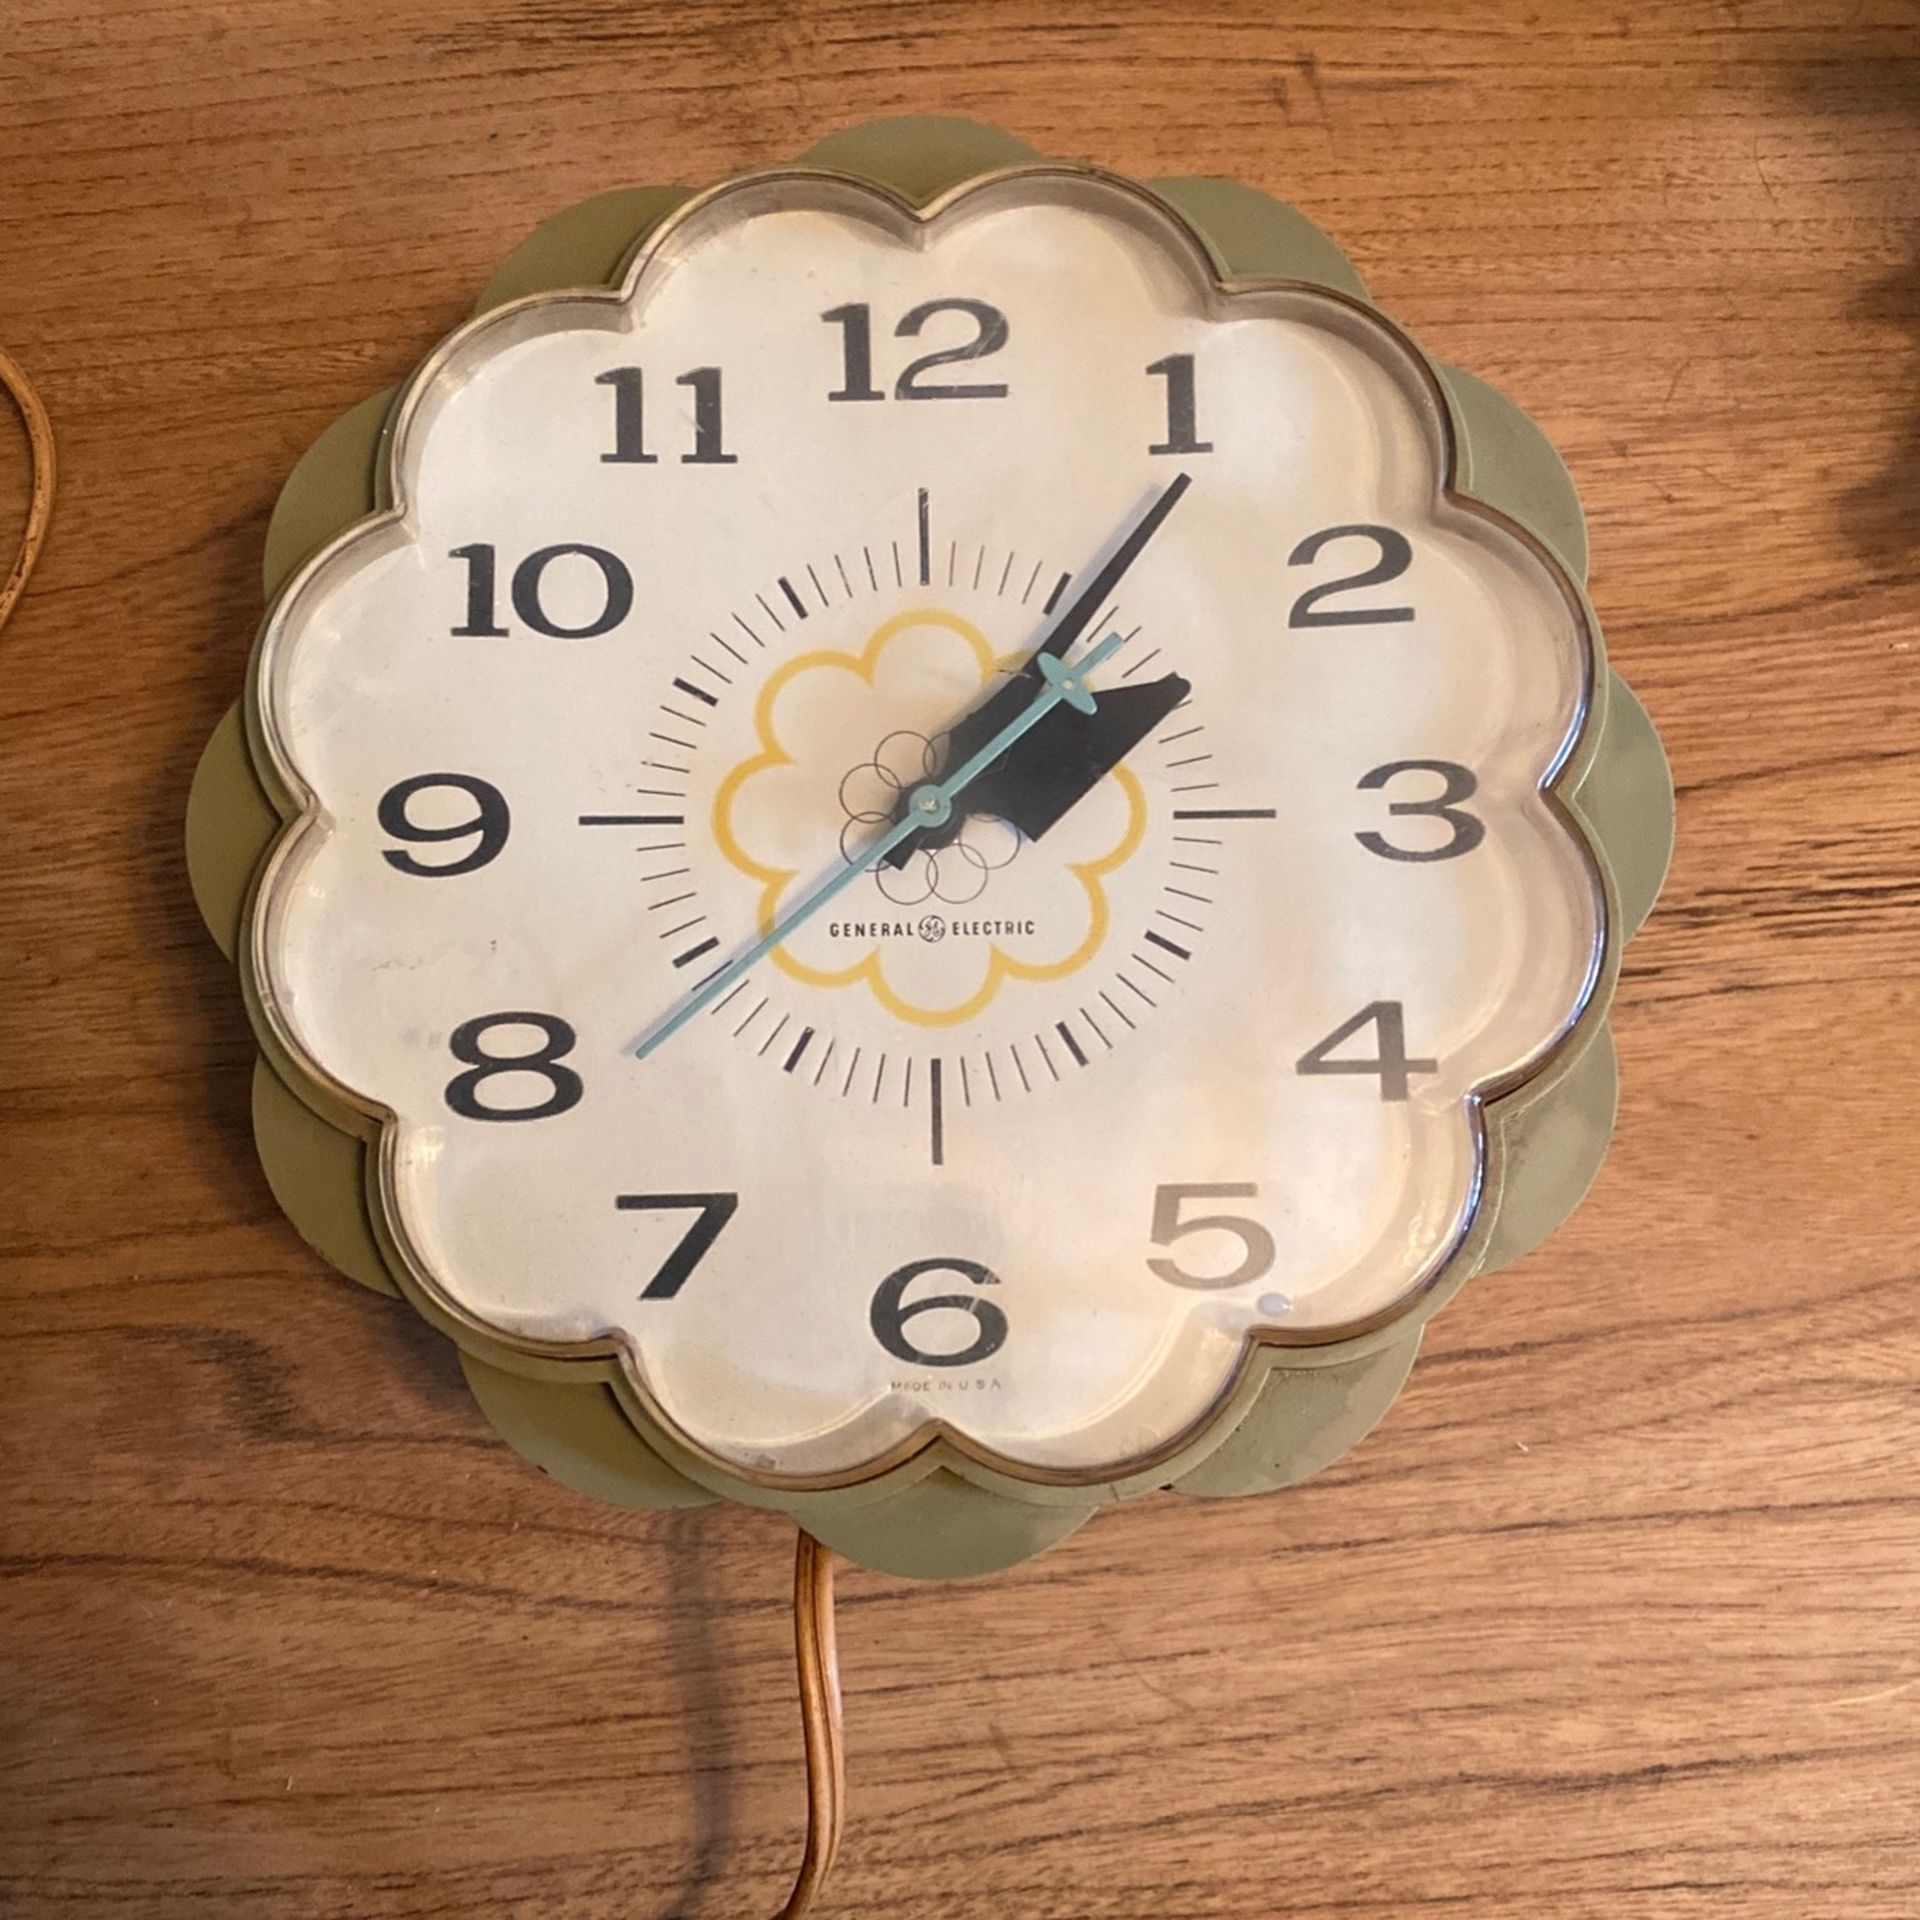 General Electric MCM Daisy Wall Clock